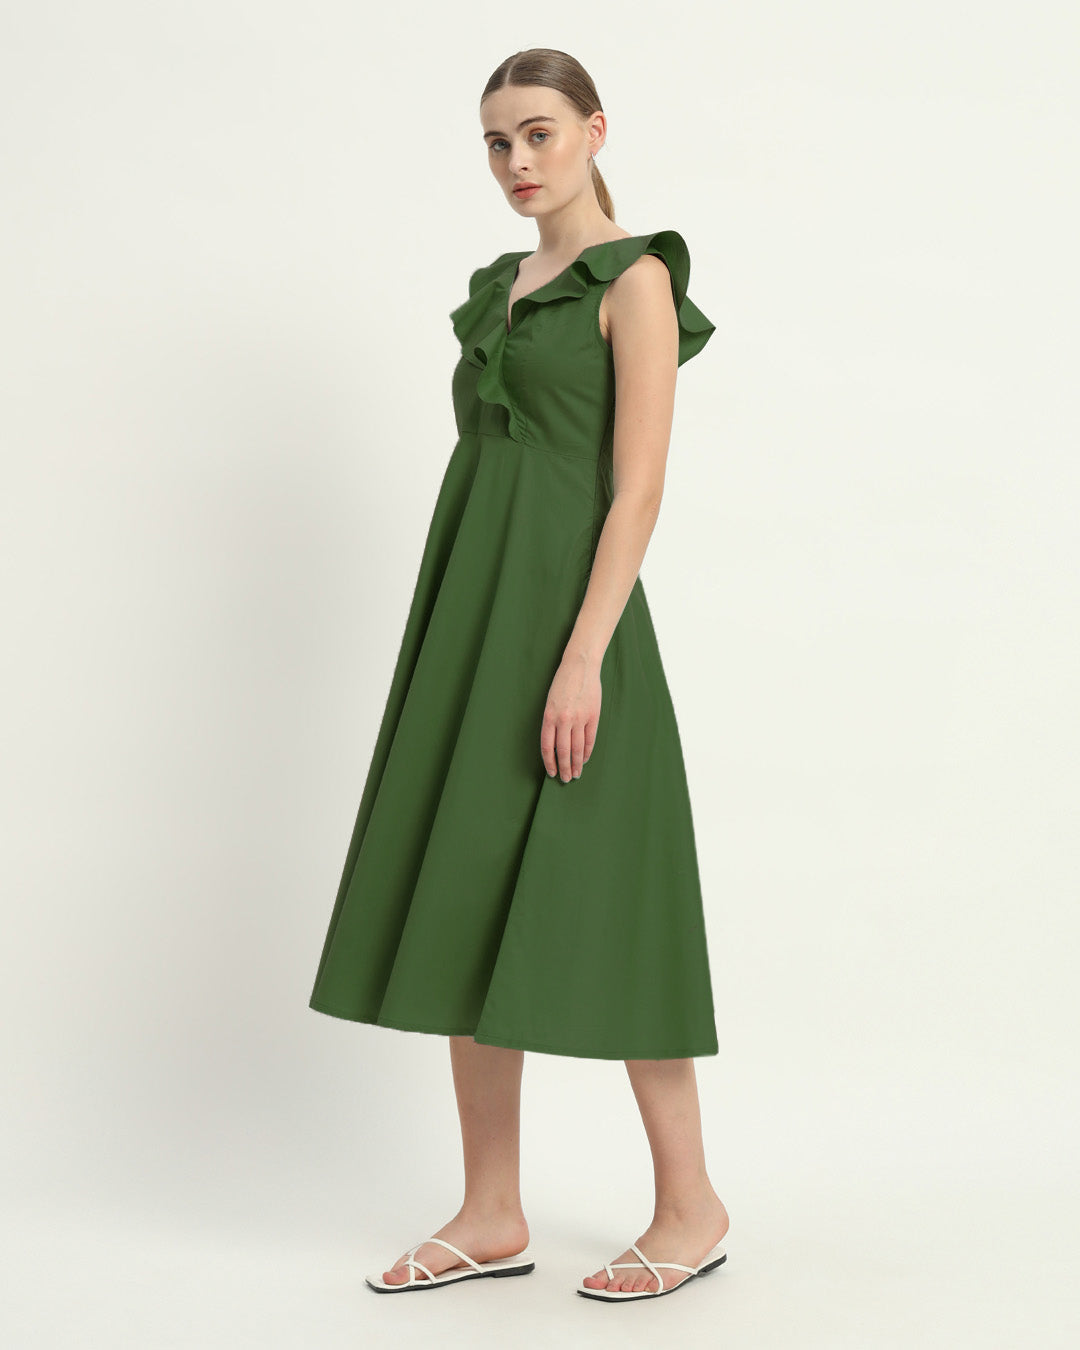 The Emerald Albany Cotton Dress